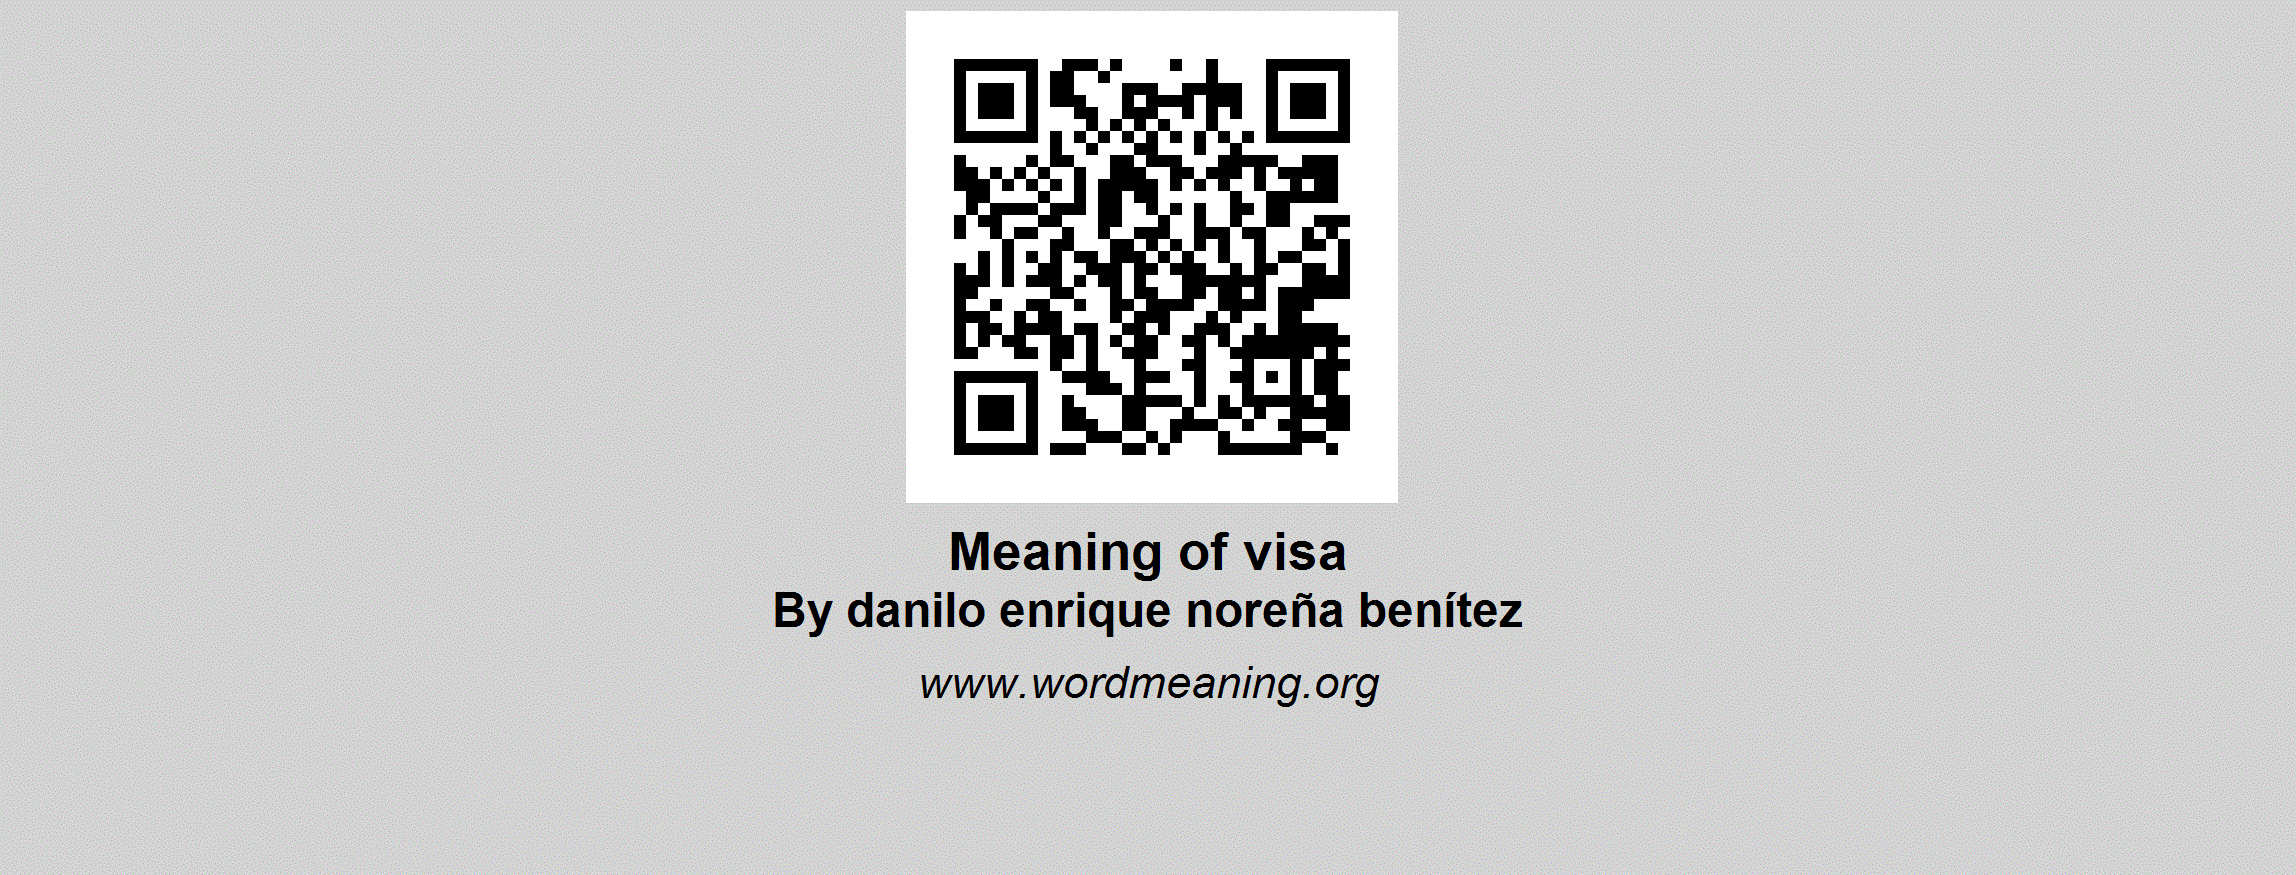 VISA Meaning of visa by Danilo Enrique Noreña Benítez